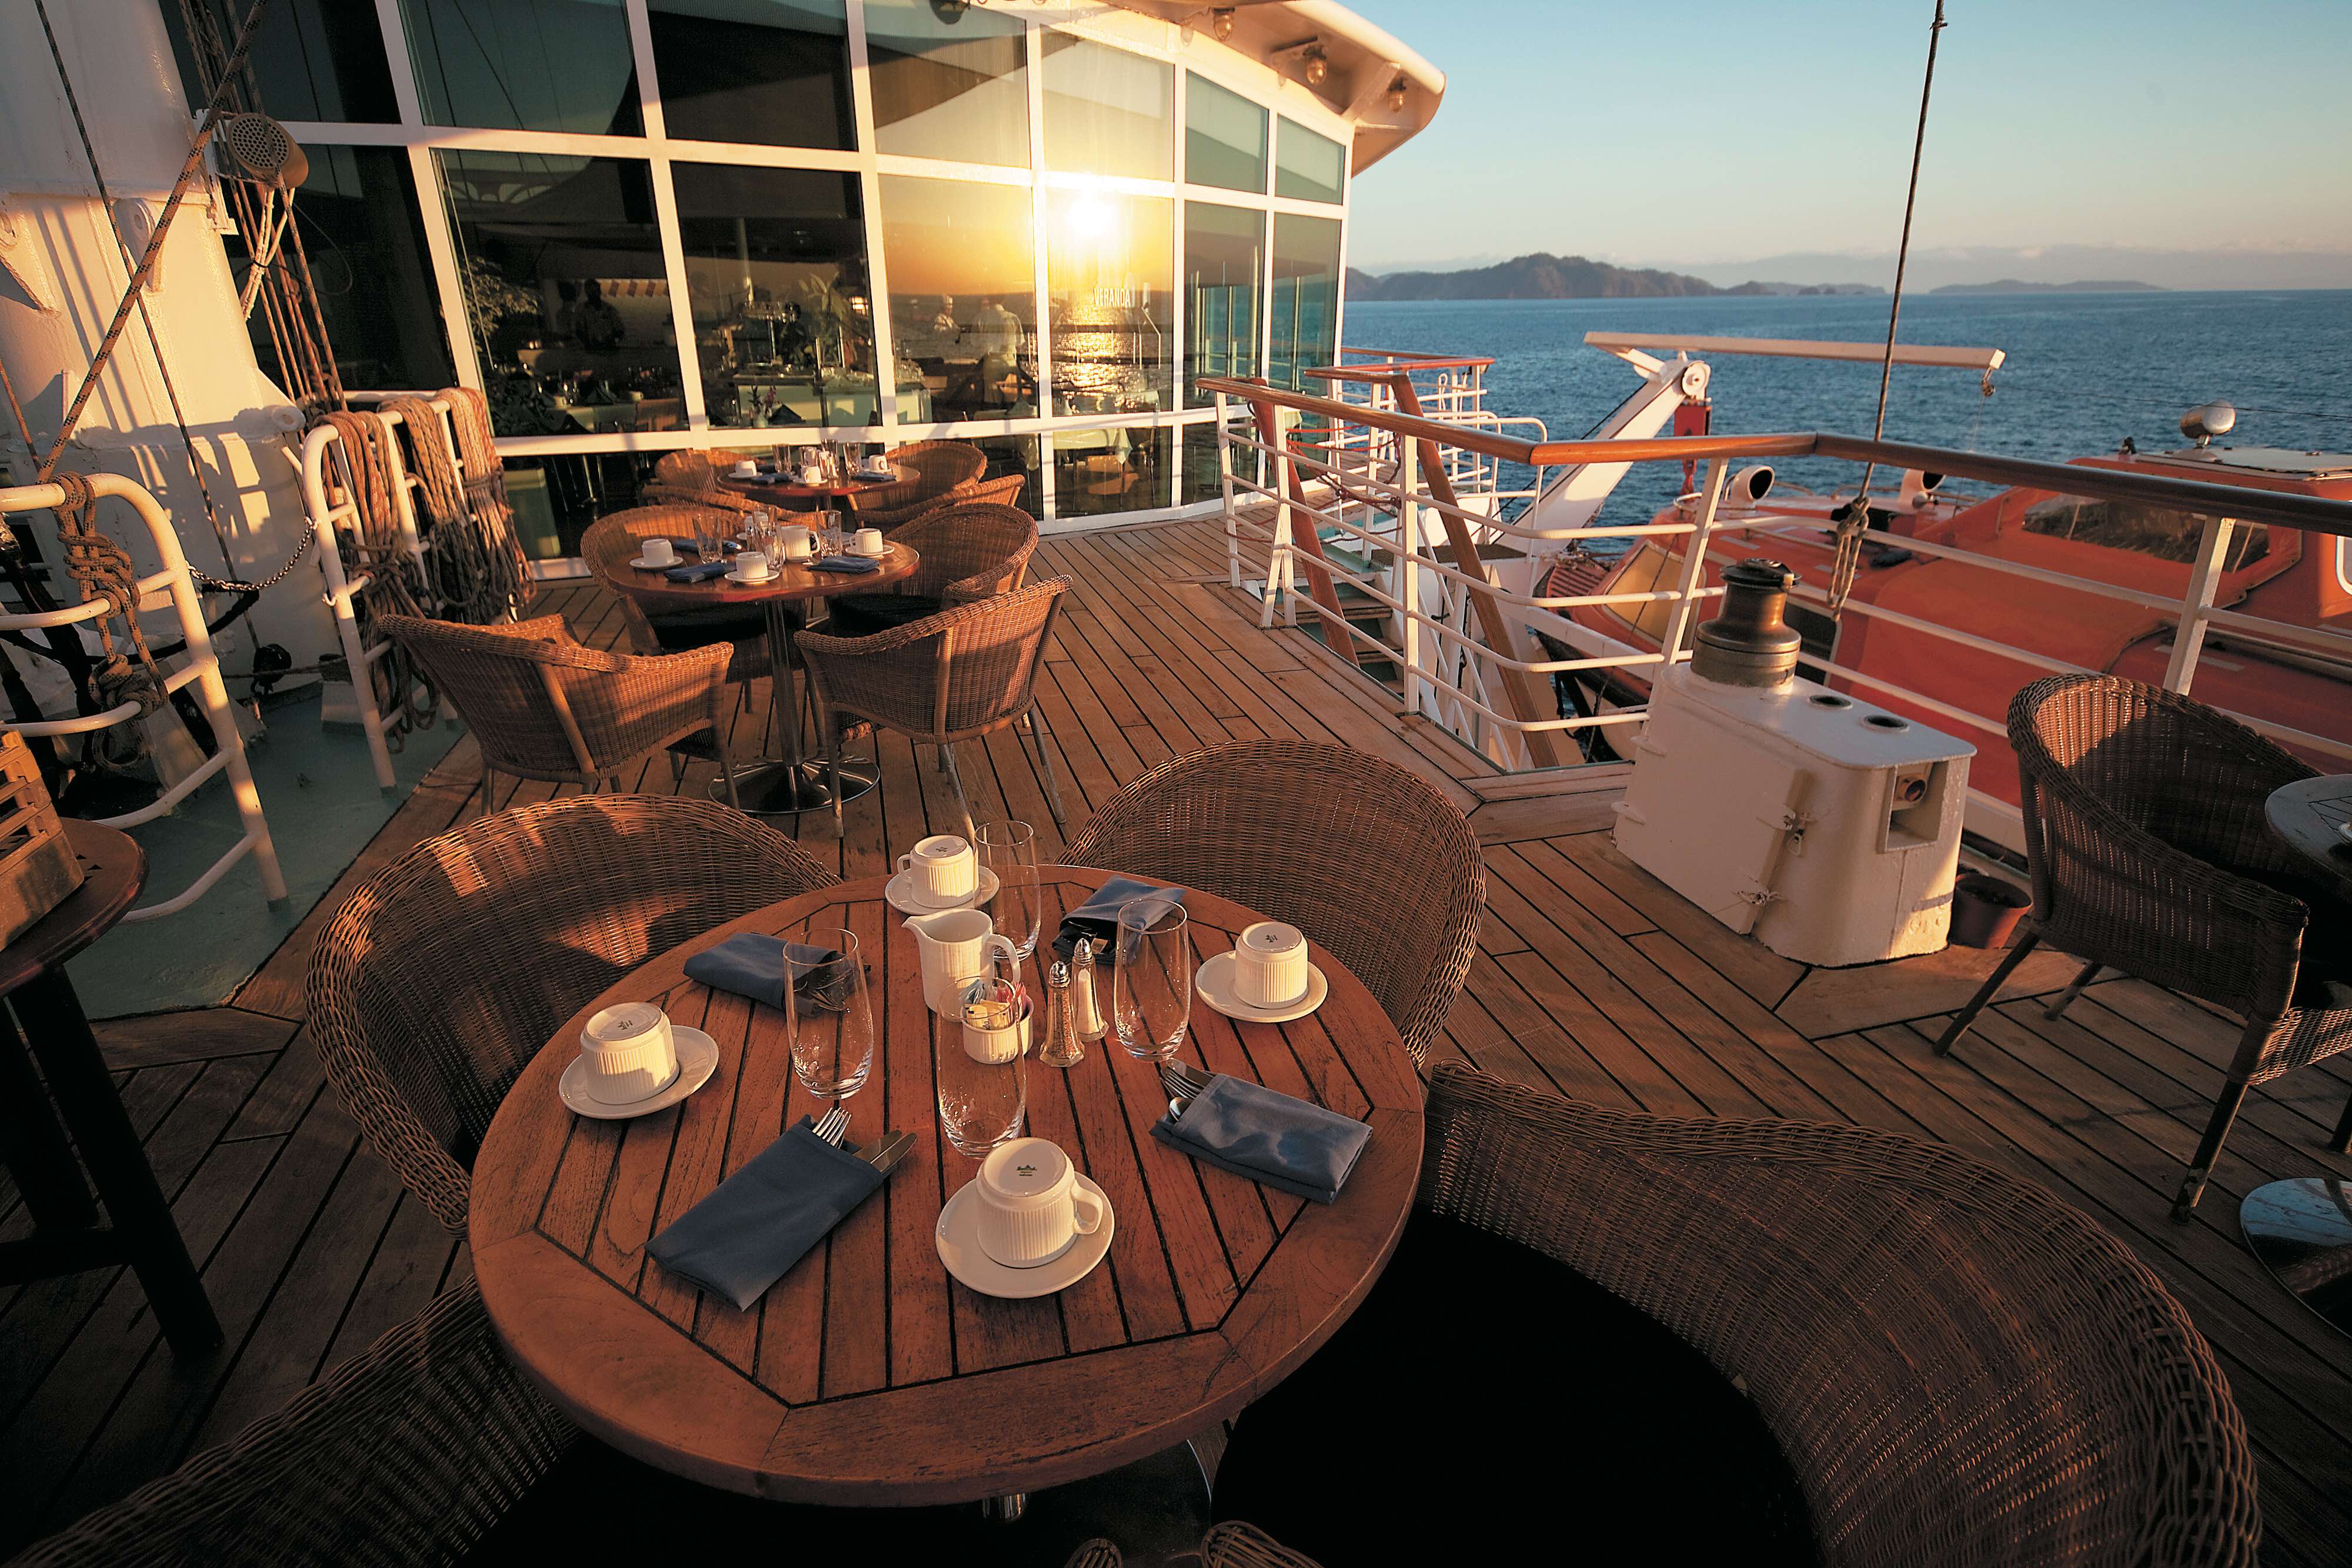 Окно на палубе. Ресторан на палубе корабля. Вид с палубы. Ресторан палуба. Палуба круизного лайнера.